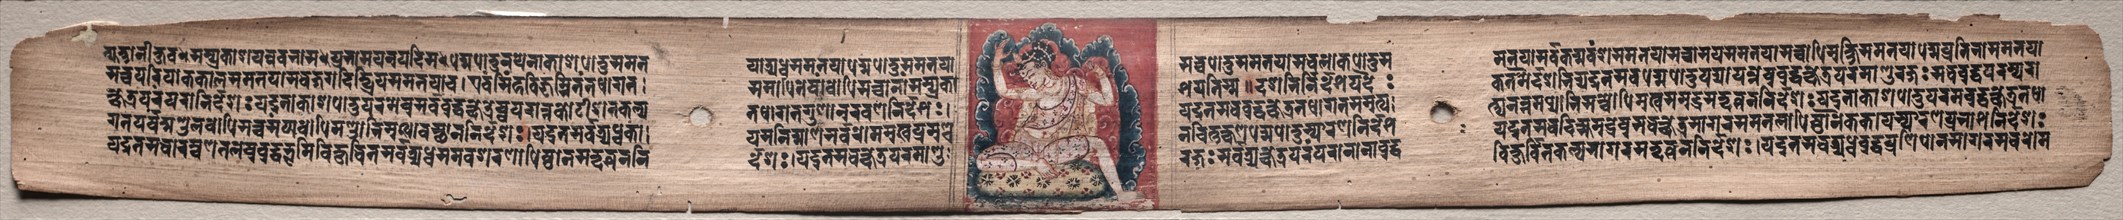 Leaf from Gandavyuha: The Bodhisattva Samantabhadra, from Chapter 2 (recto), 1000-1100s. Eastern